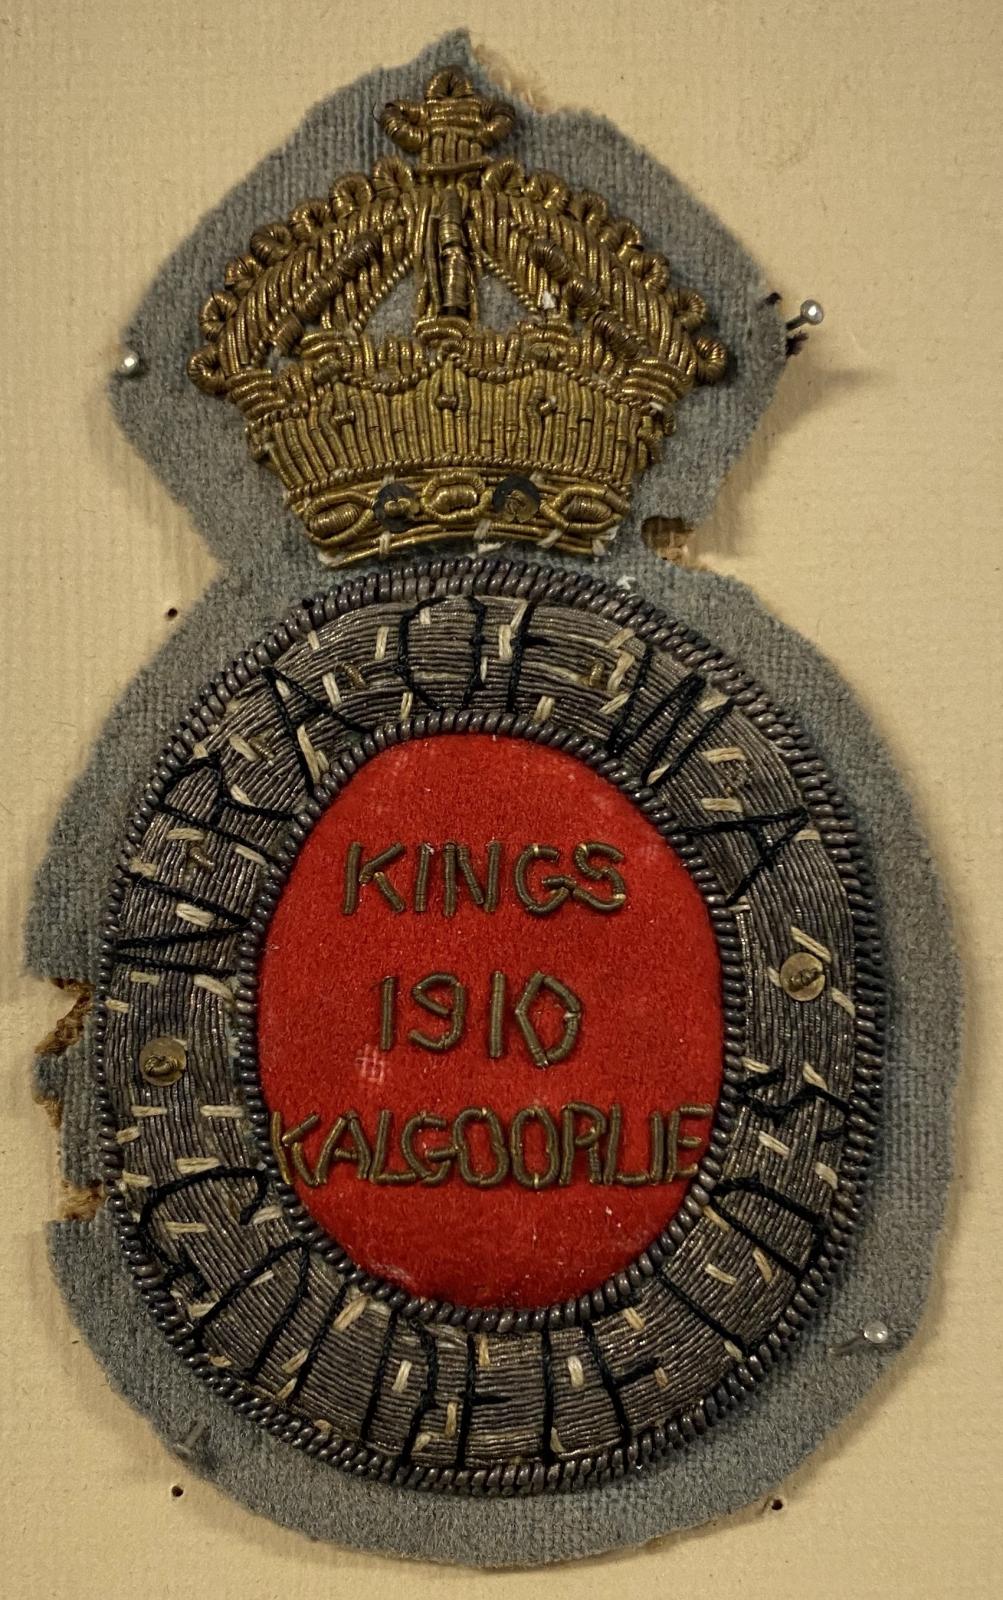 Bill Garrity's 1910 King's Prize badge